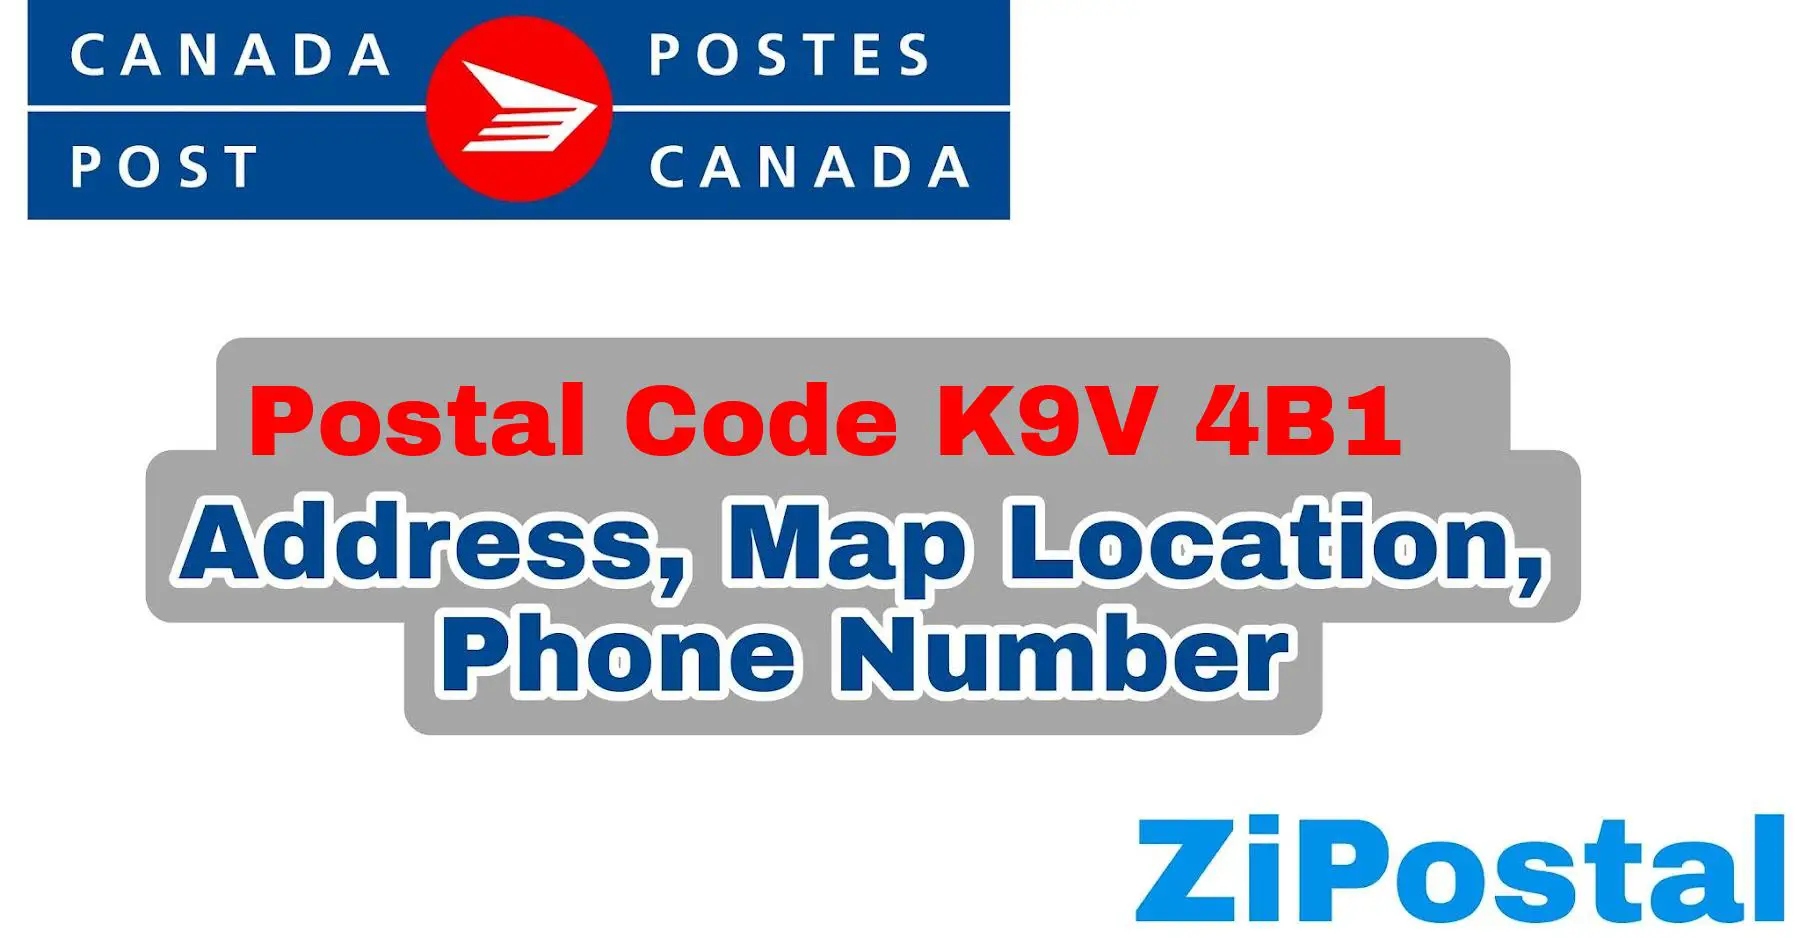 Postal Code K9V 4B1 Address Map Location and Phone Number